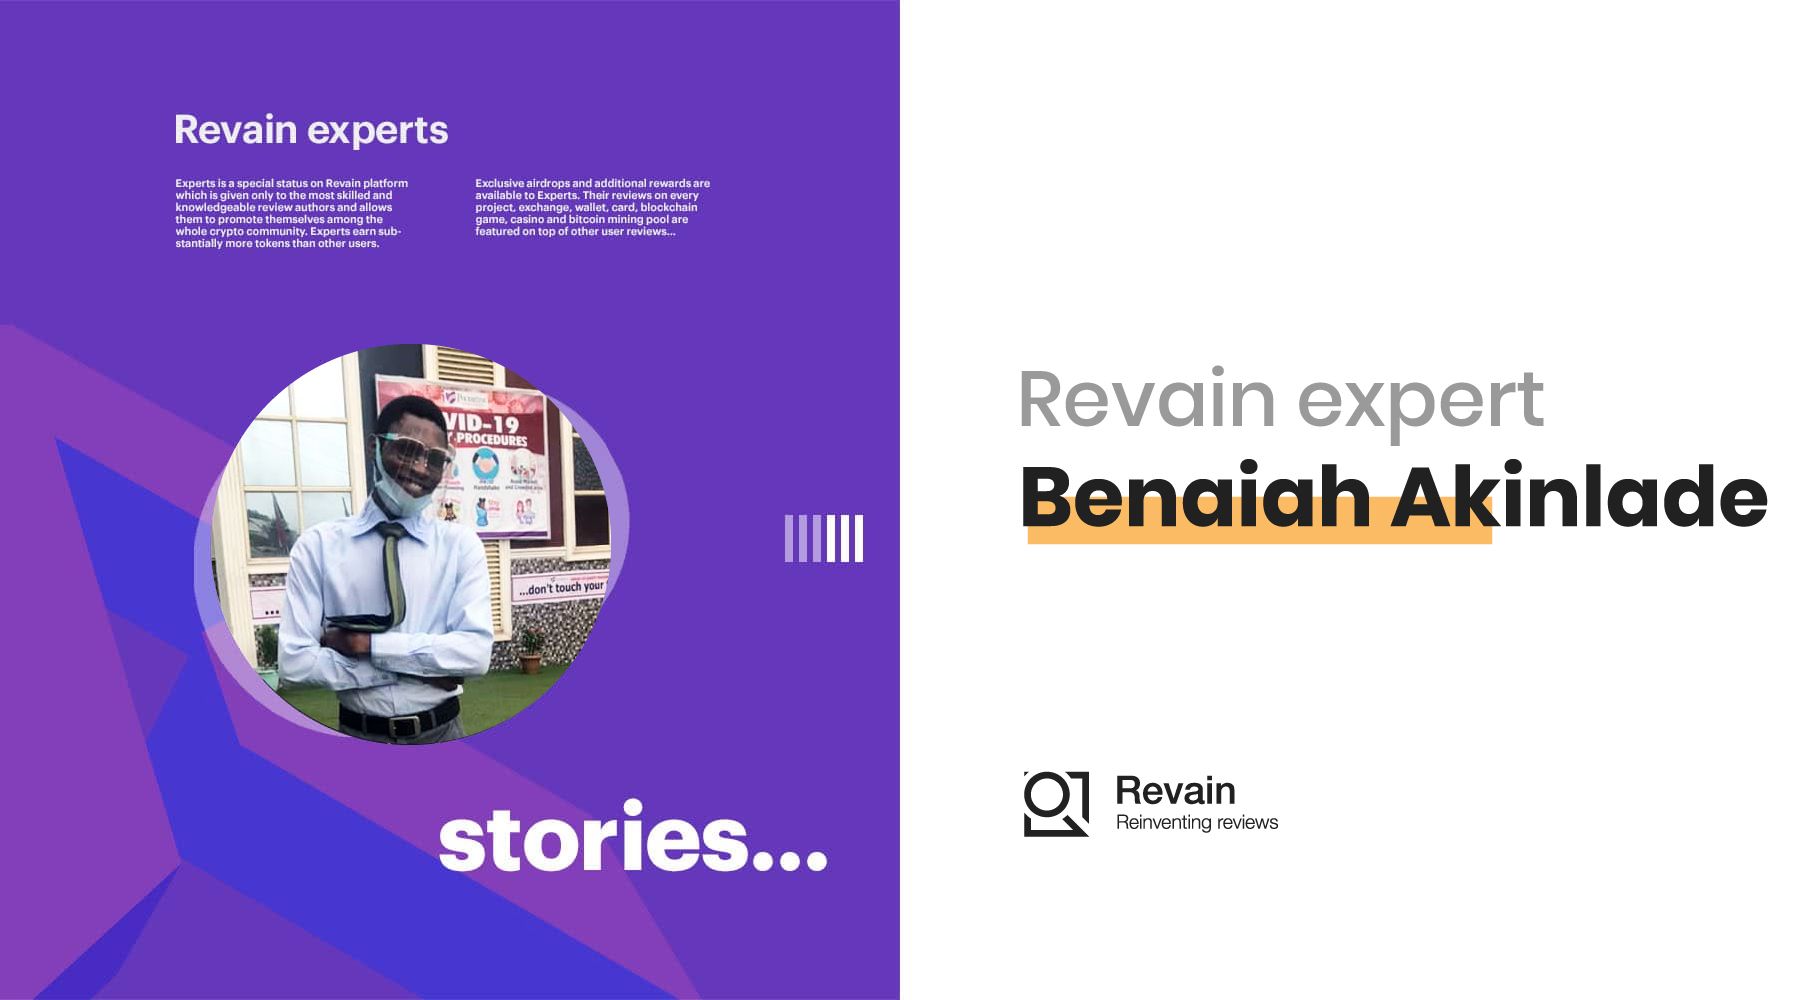 Benaiah Akinlade's Story